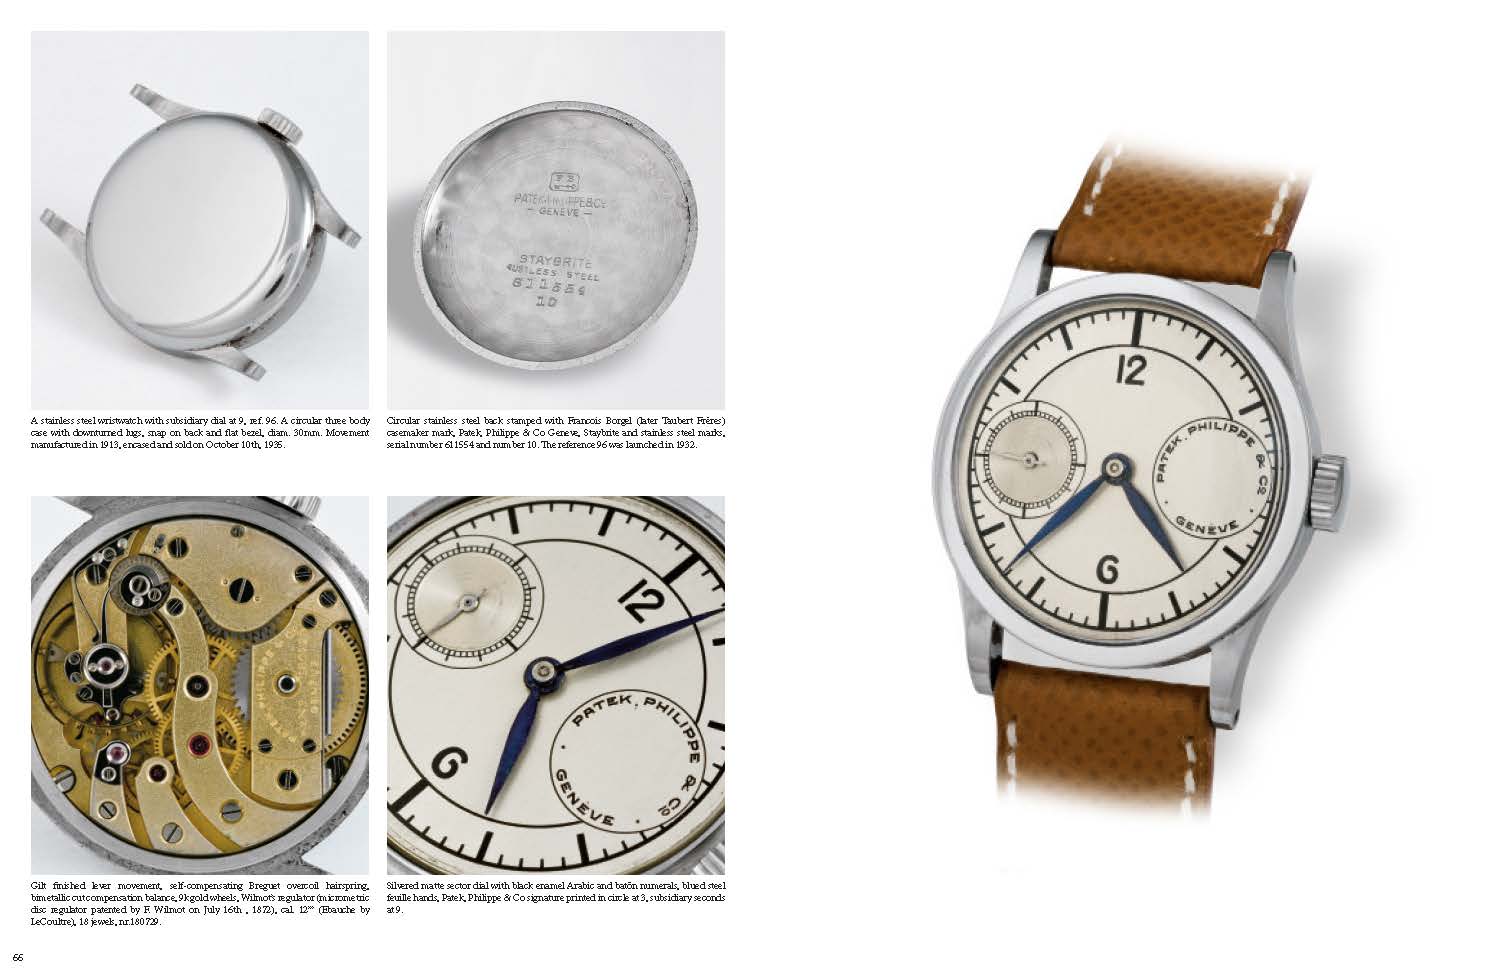 Patek Philippe - Steel Watches